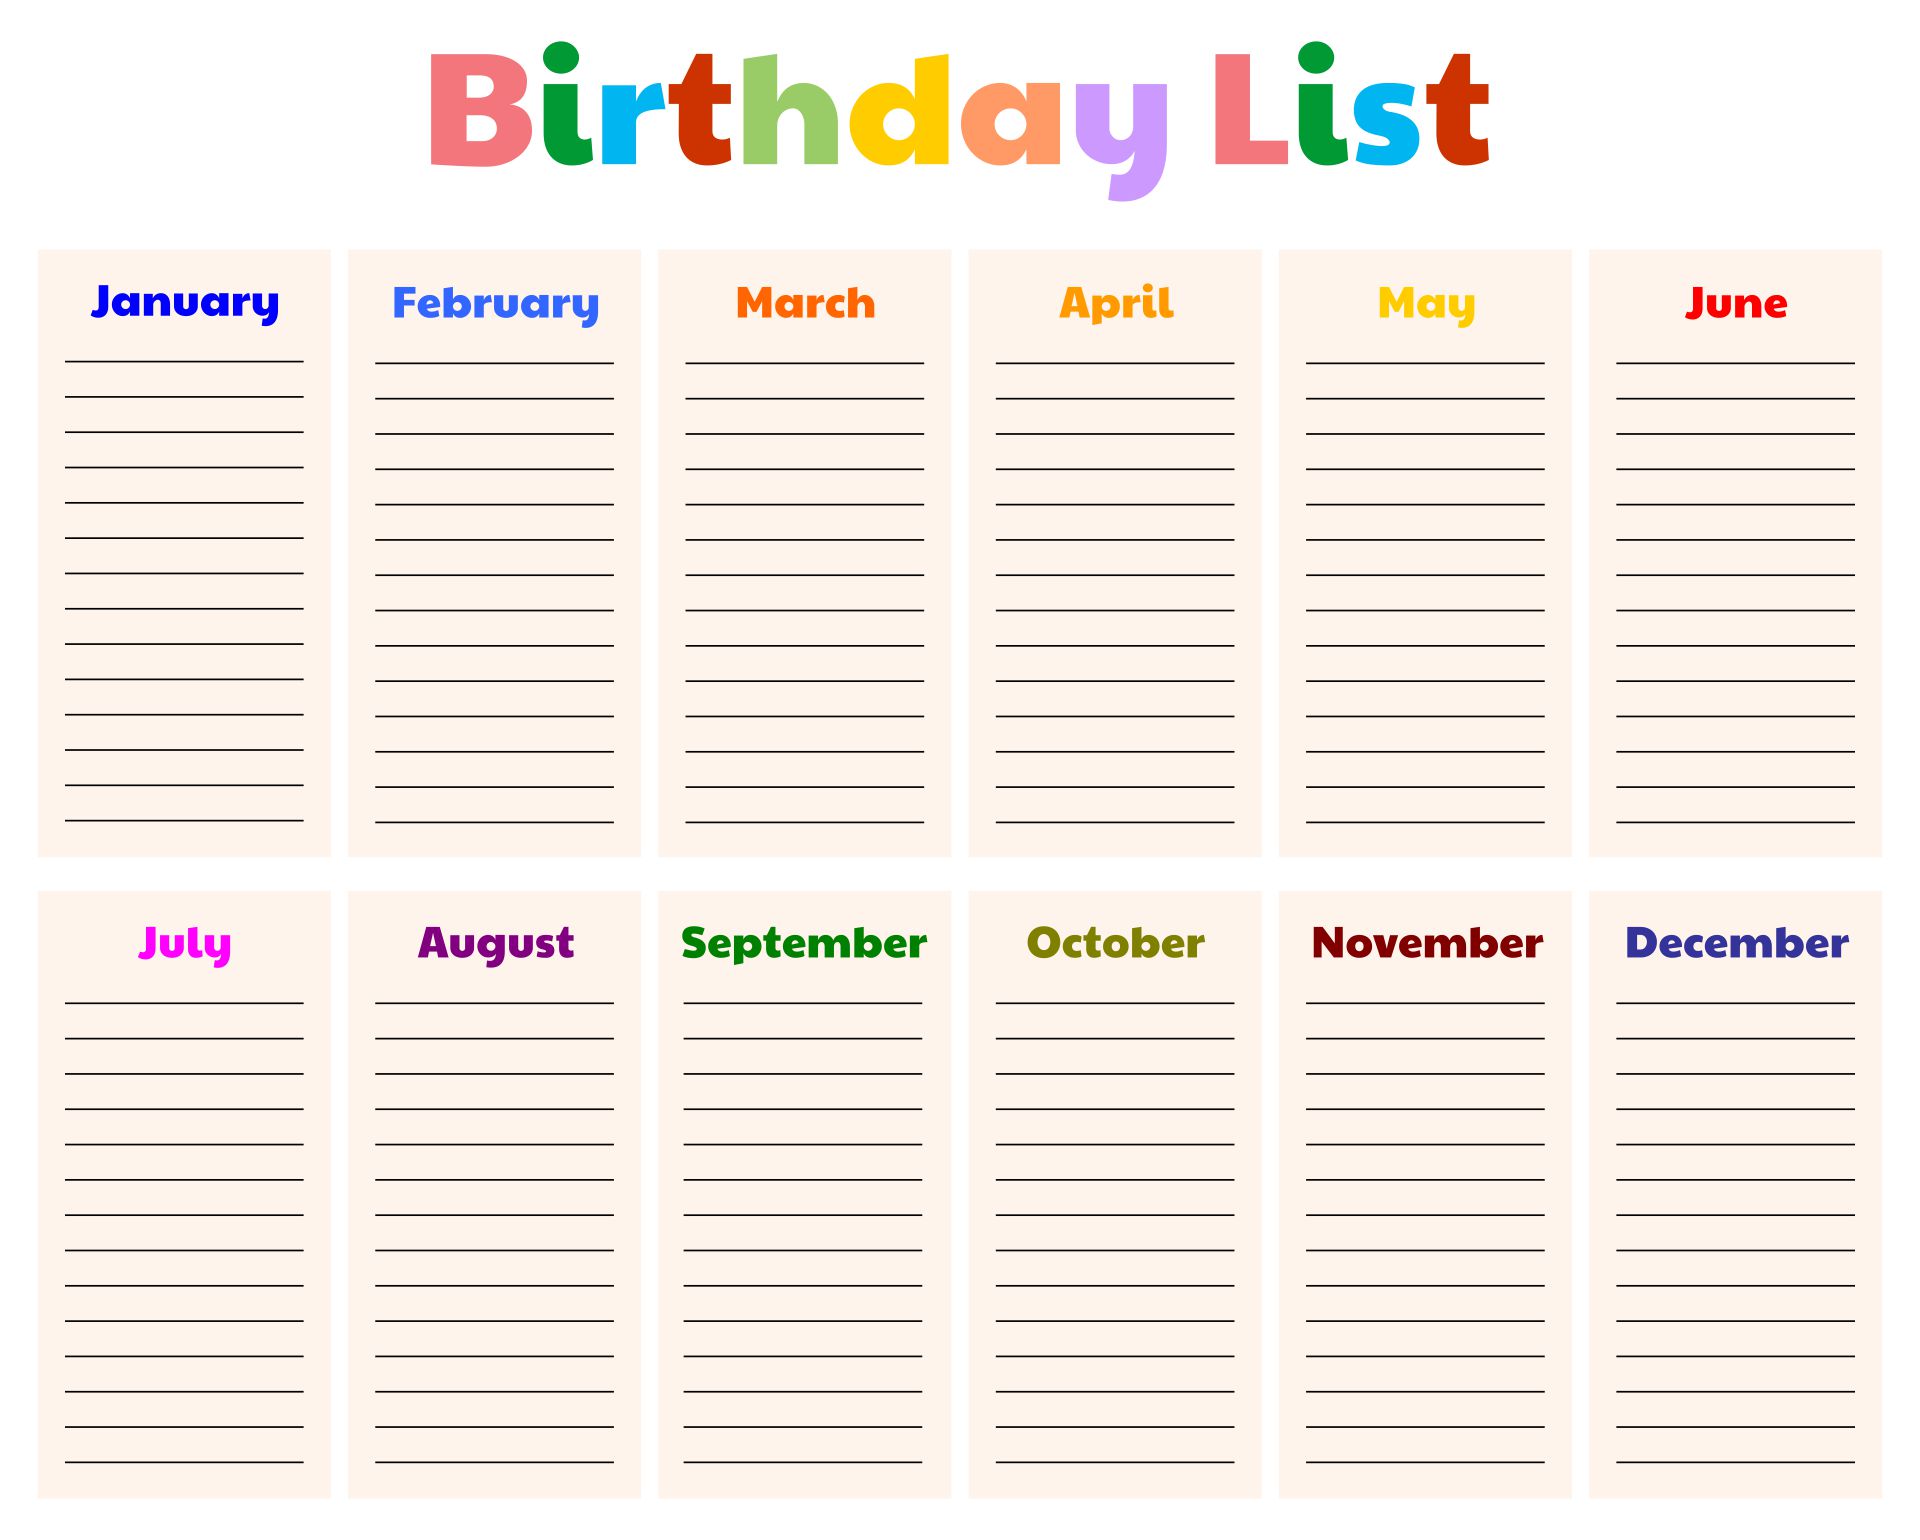 Employee Birthday List Template